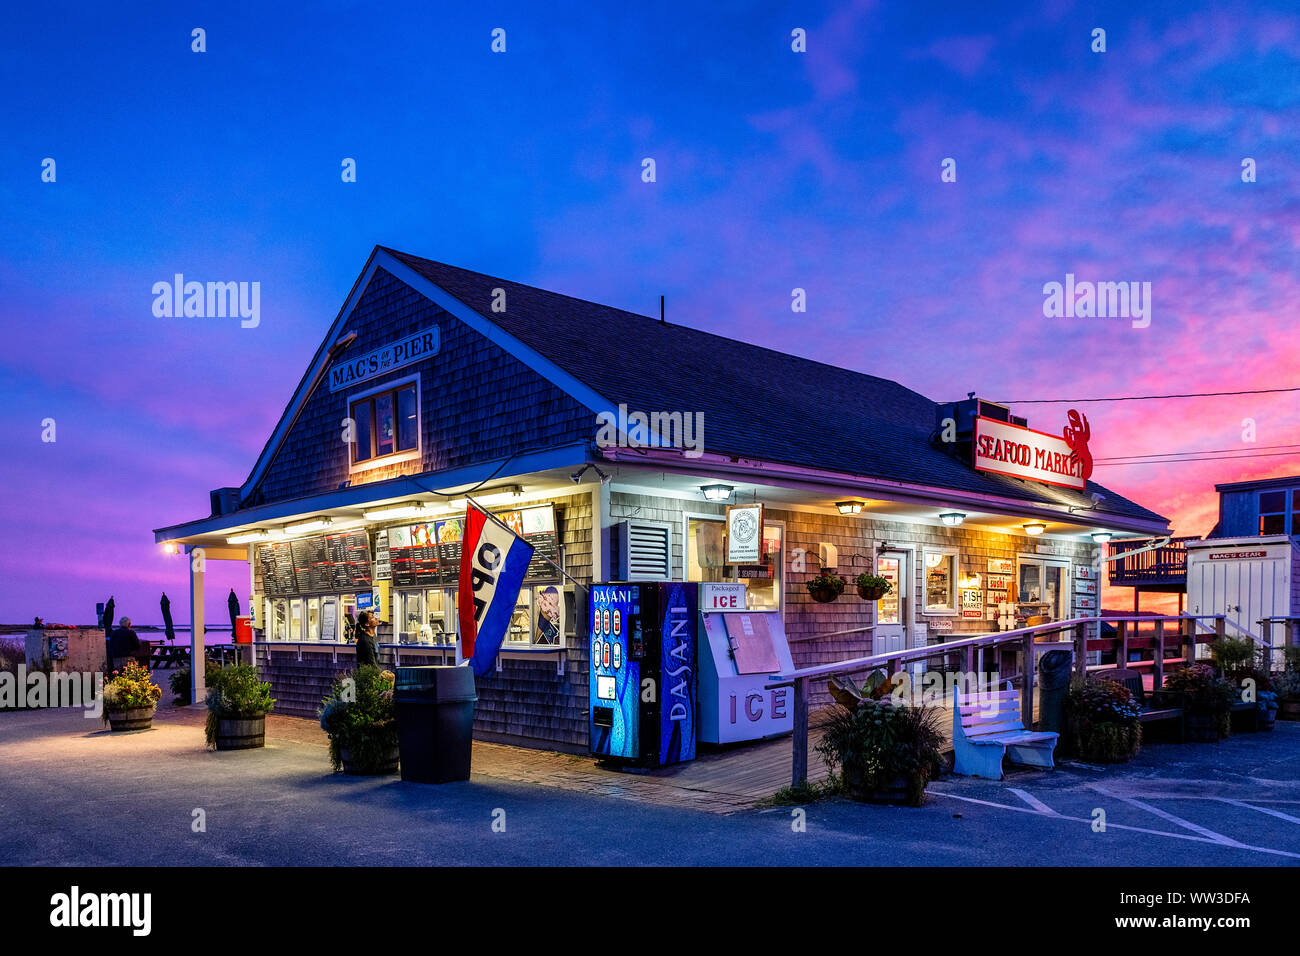 Mac's Pier and Seafood Market, Wellfleet, Cape Cod, Massachusetts, USA. Stock Photo